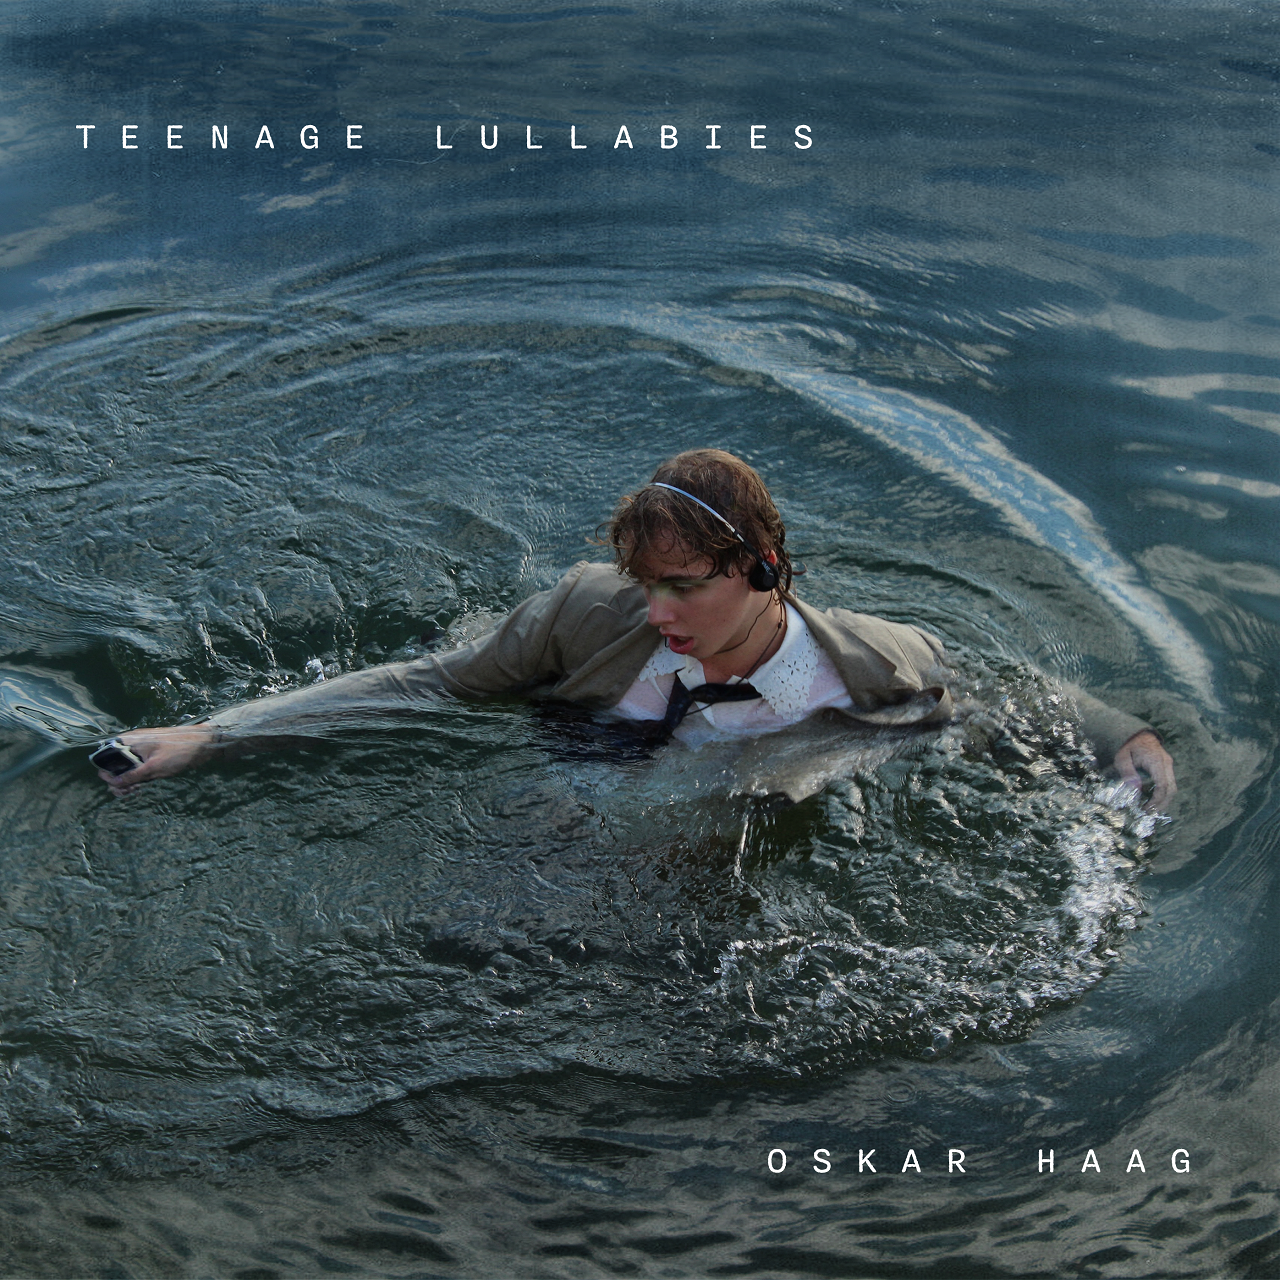 Albumcover Oskar Haag "Teenage Lullabies"